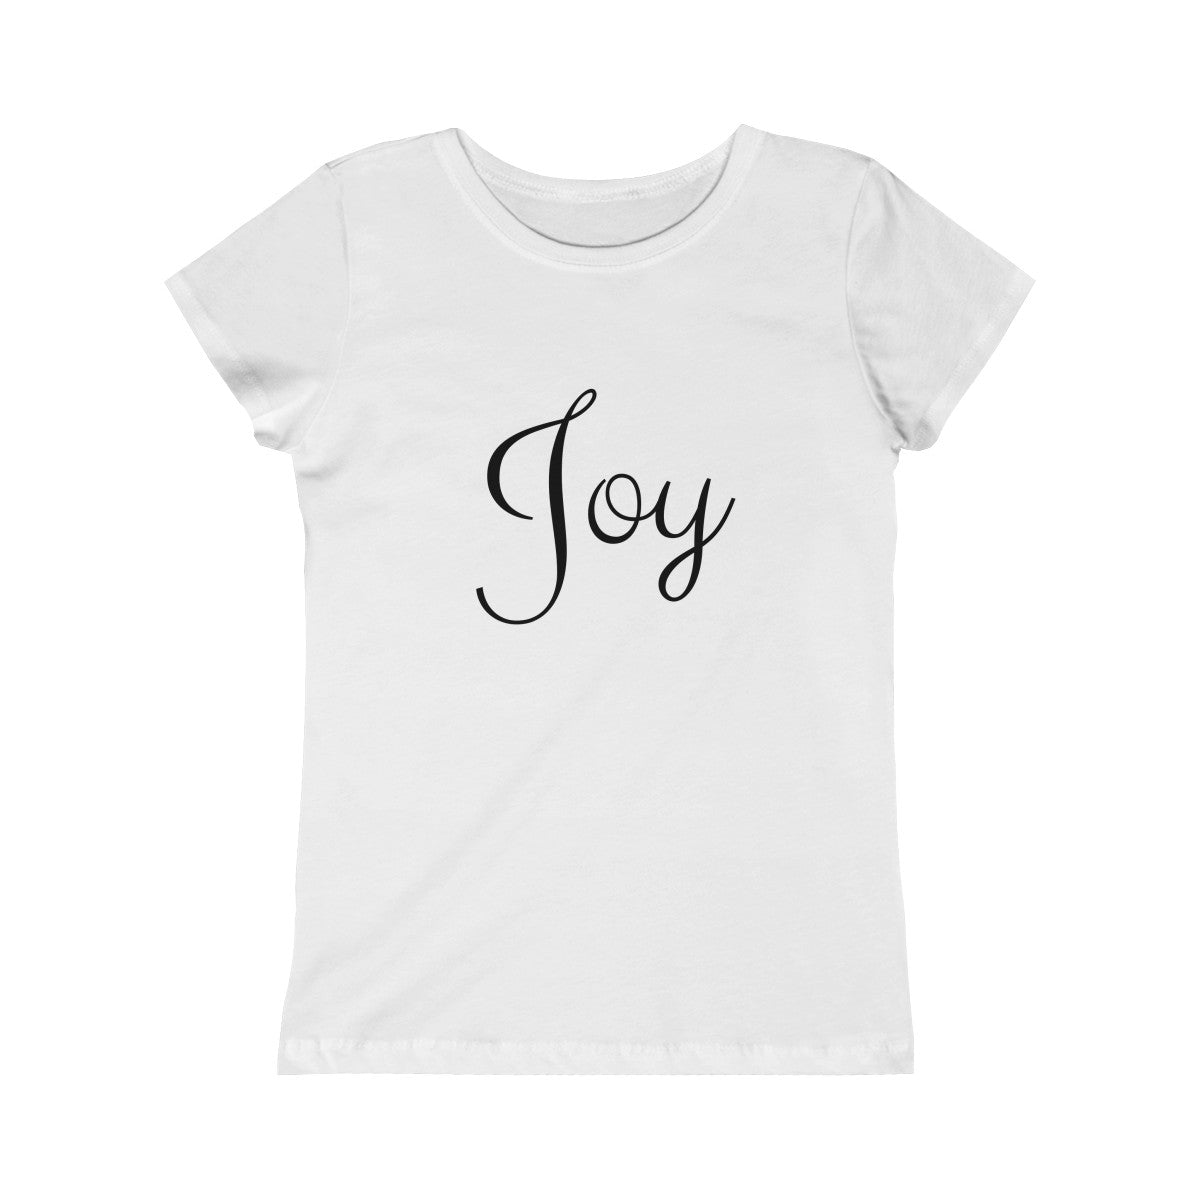 "Joy" Girls Tee